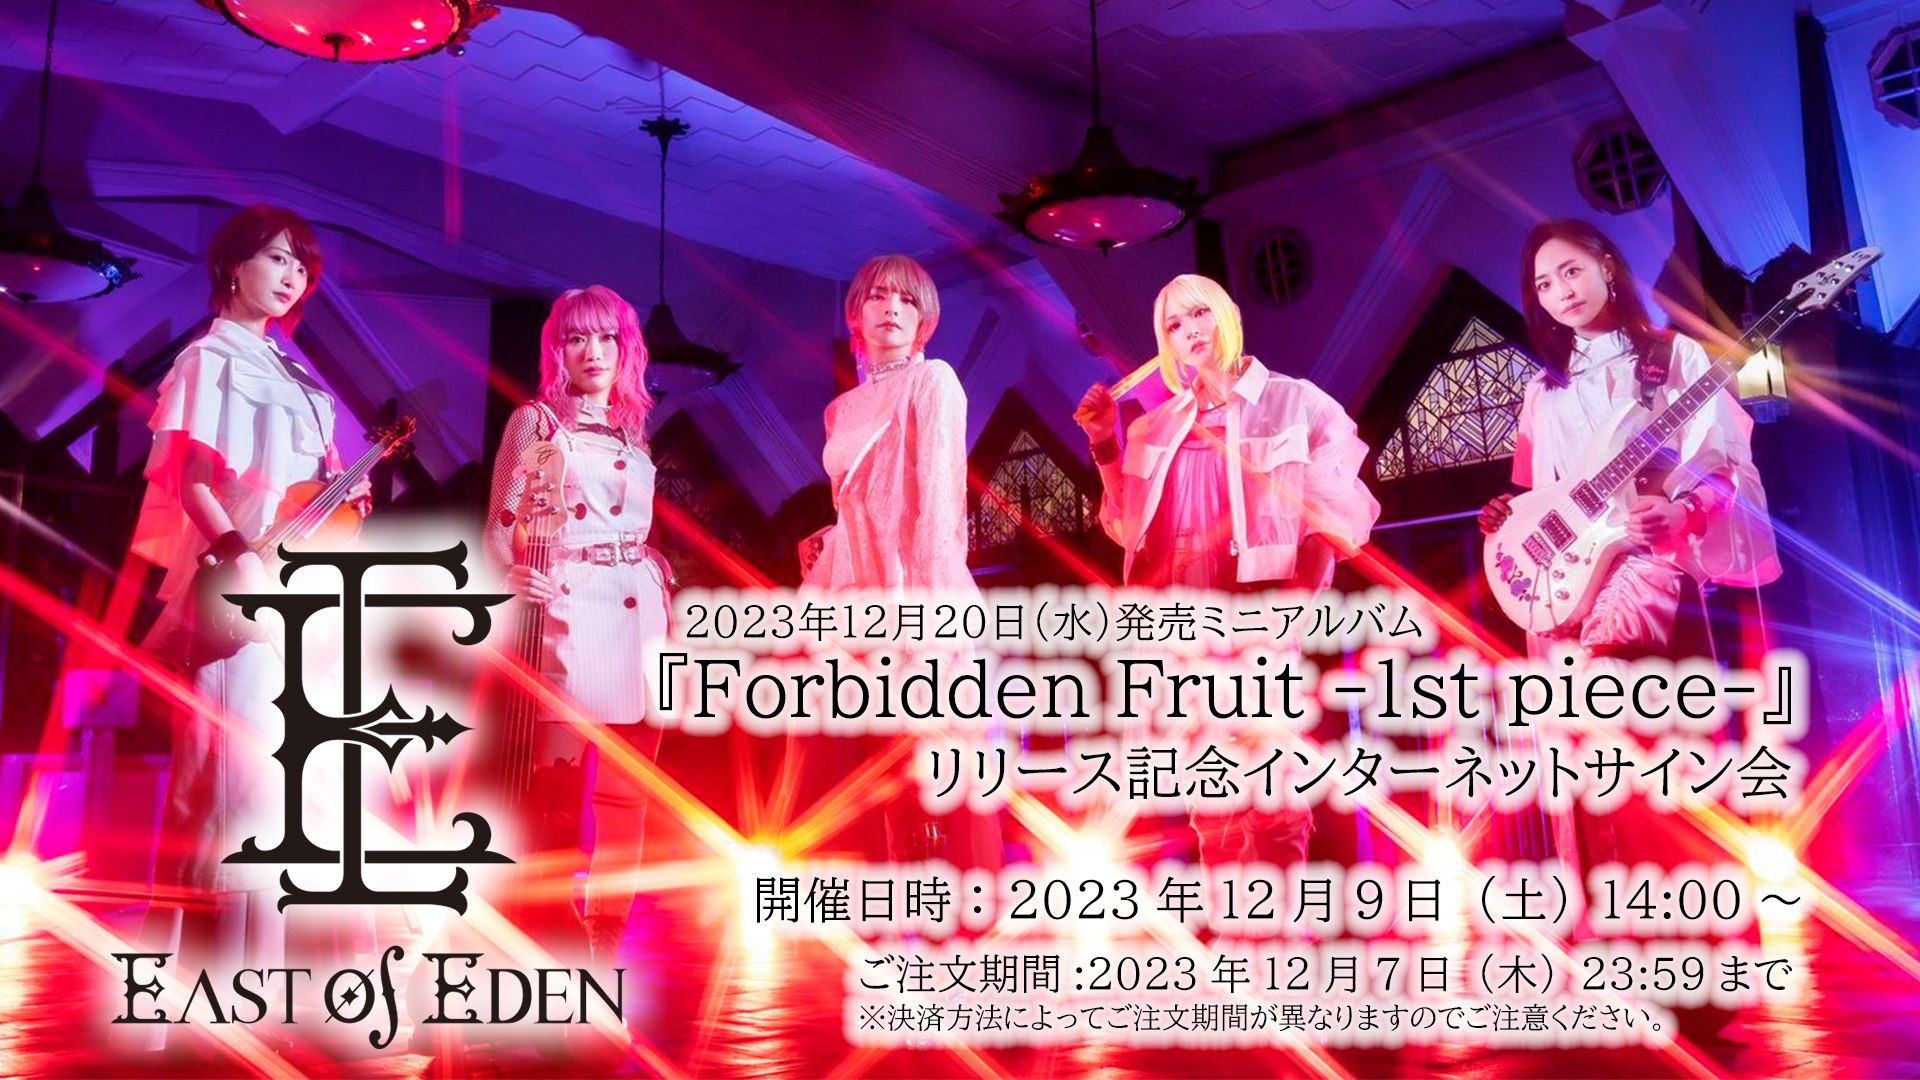 East Of Eden ミニアルバム 「Forbidden Fruit -1st piece-」 リリース 